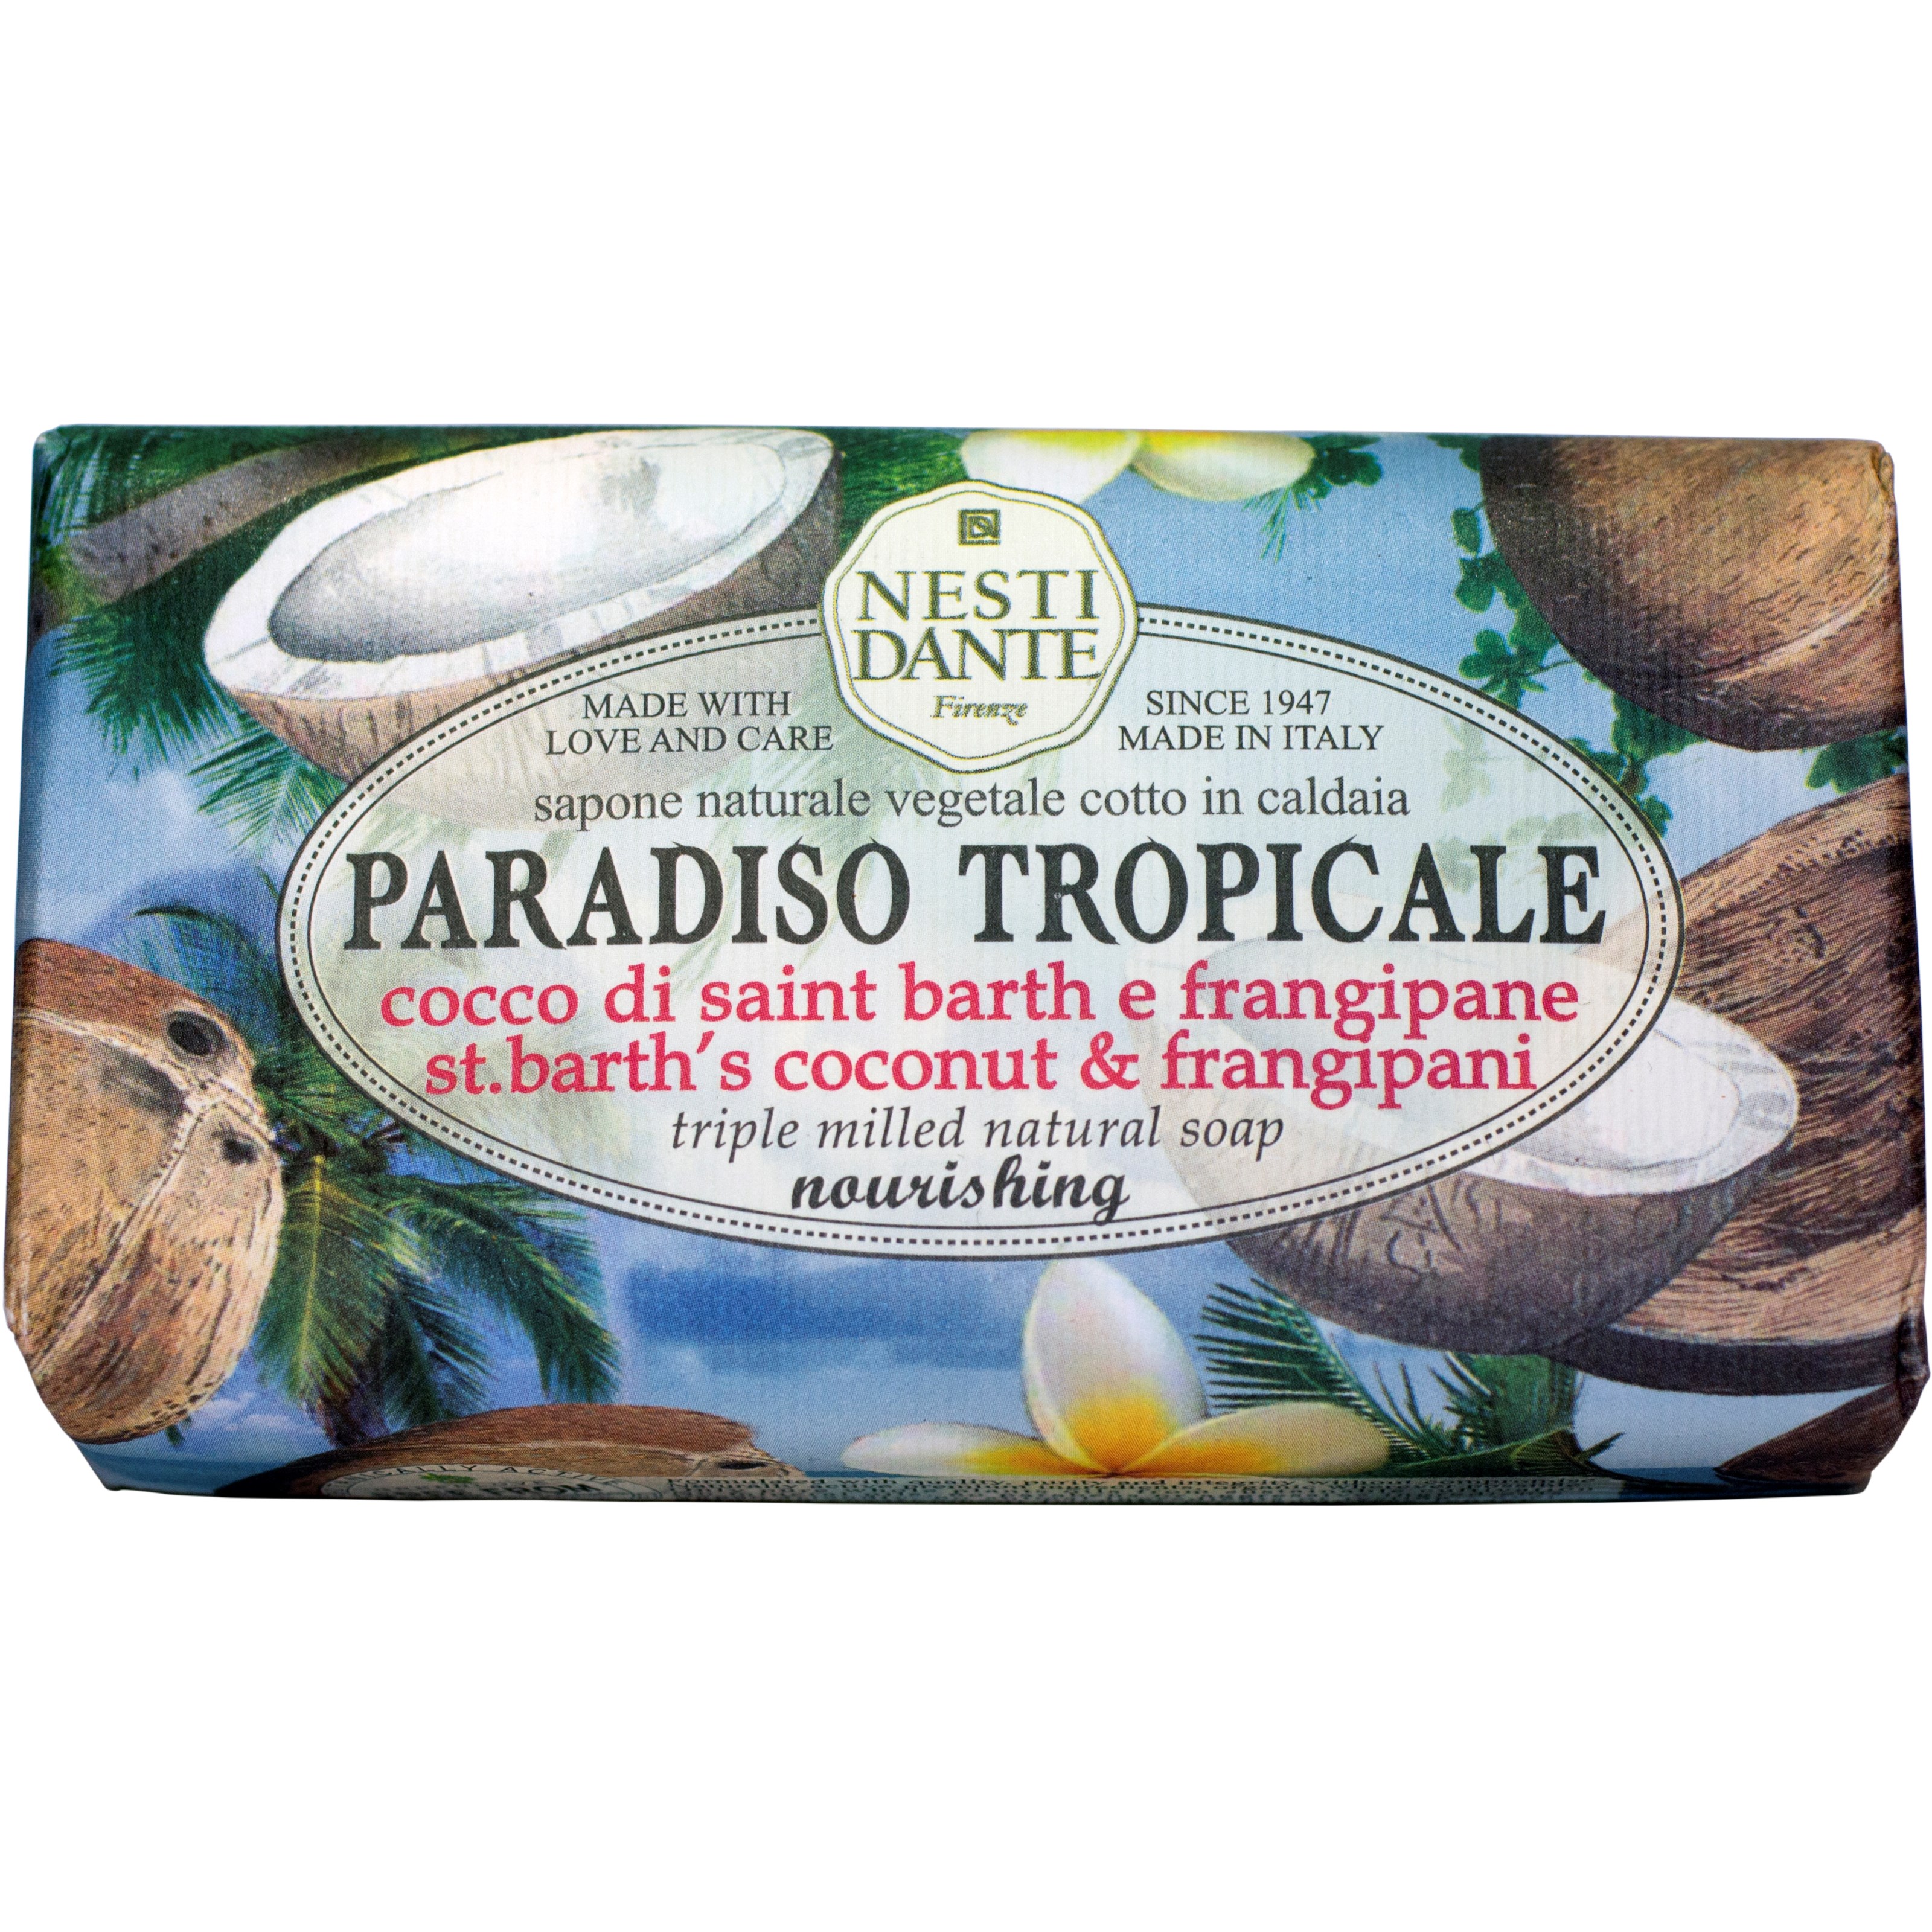 Nesti Dante Paradiso Tropicale St. Barth’s Coconut & Frangipani 250 g